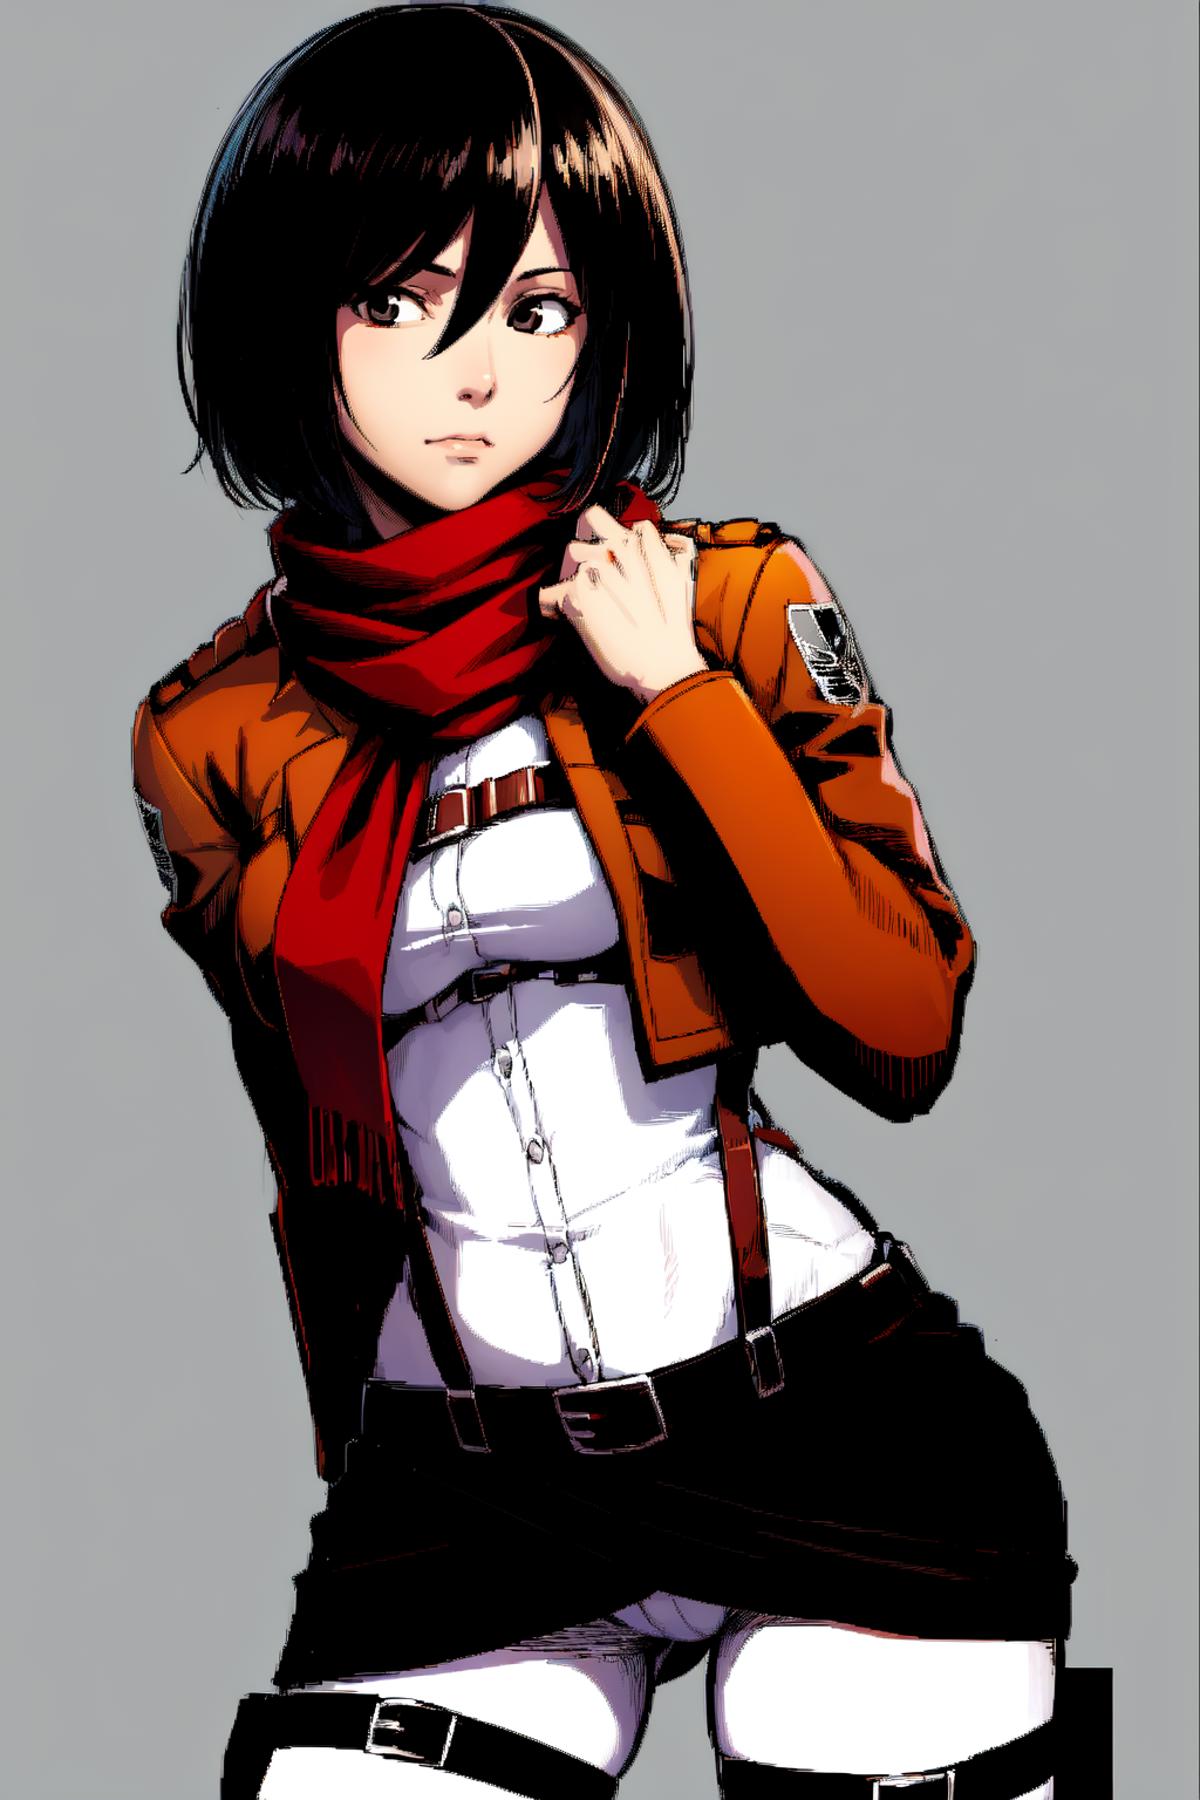 Mikasa Ackerman ミカサ・アッカーマン / Shingeki no Kyojin image by Kayako